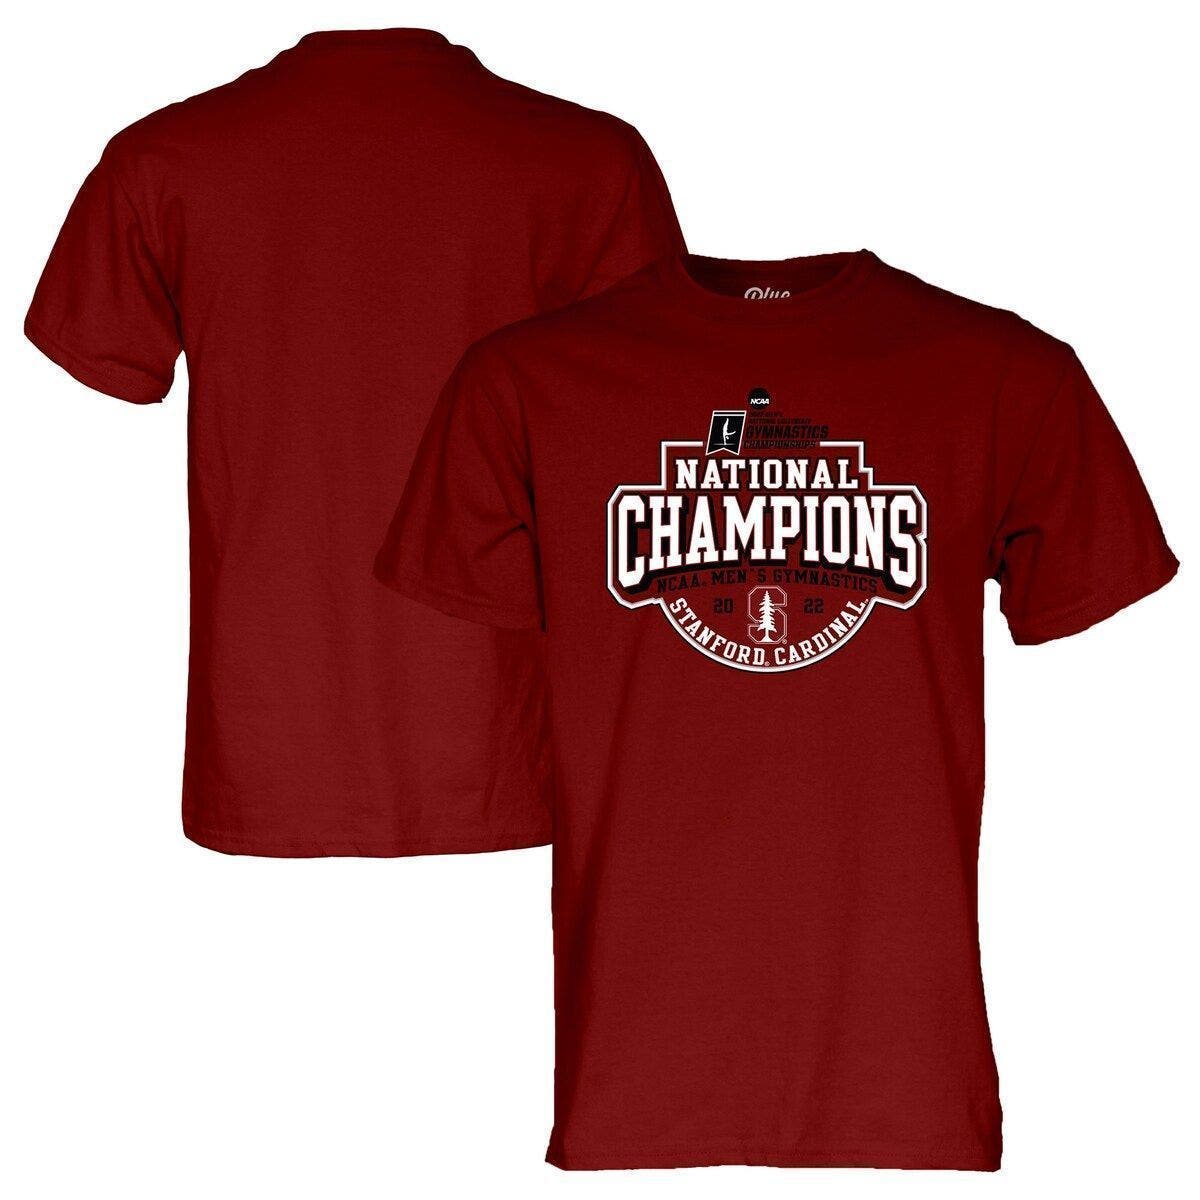 BOXERCRAFT red 2016 NCAA BASKETBALL NATIONAL CHAMPIONS long sleeve T-shirt,S,L 